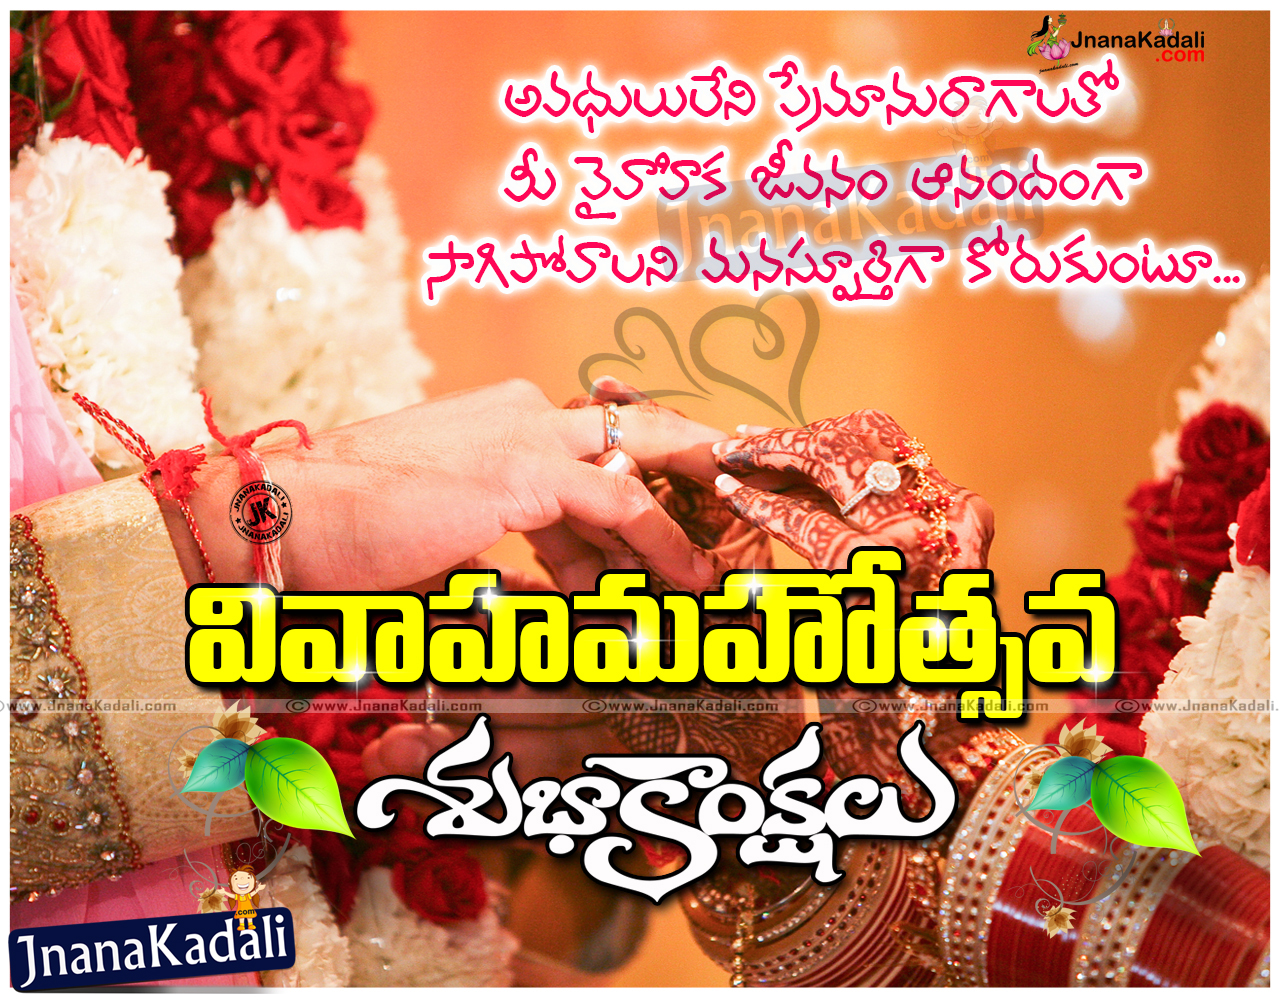 Best Telugu Marriage Anniversary Greetings and wishes happy wedding anniversary telugu wishes quotes hd wallpapers